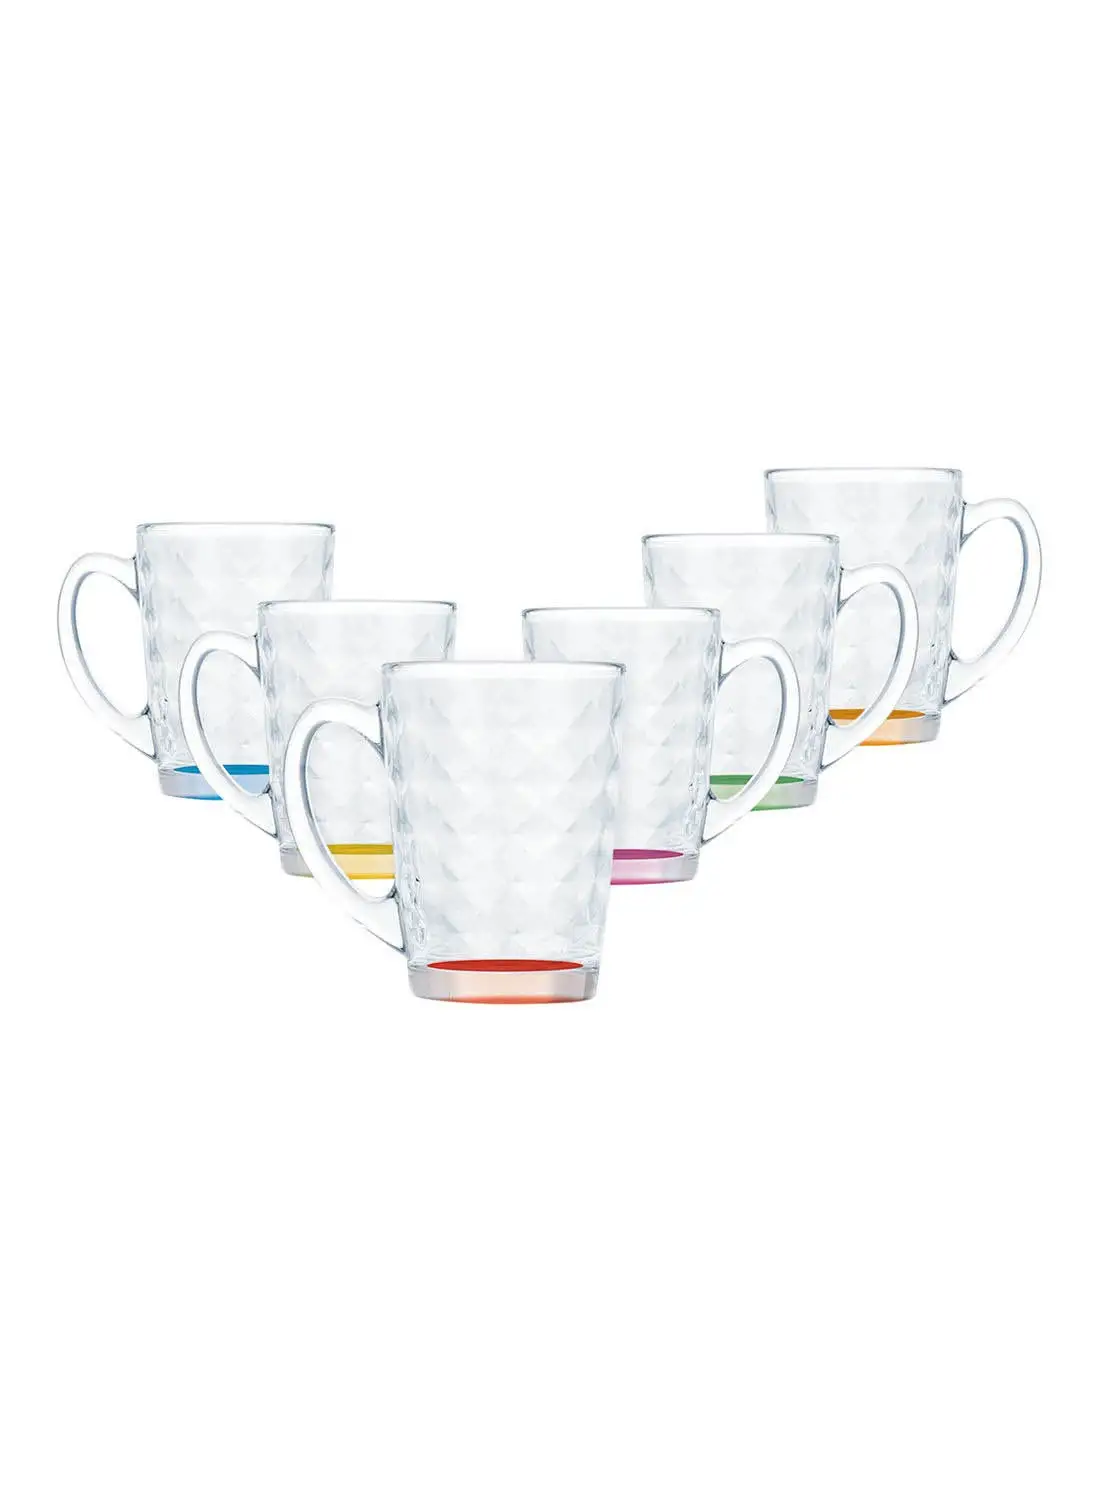 Luminarc 6 Piece Glass Mug Set - Made Of Tempered Glass - Coffee Mug Set For Cappuccino, Latte, Expresso, Tea - Heat Resistant Handles - Mug - A Cup Of Coffee - Coffee Mug - Each 320 ml - Diamond Rainbow